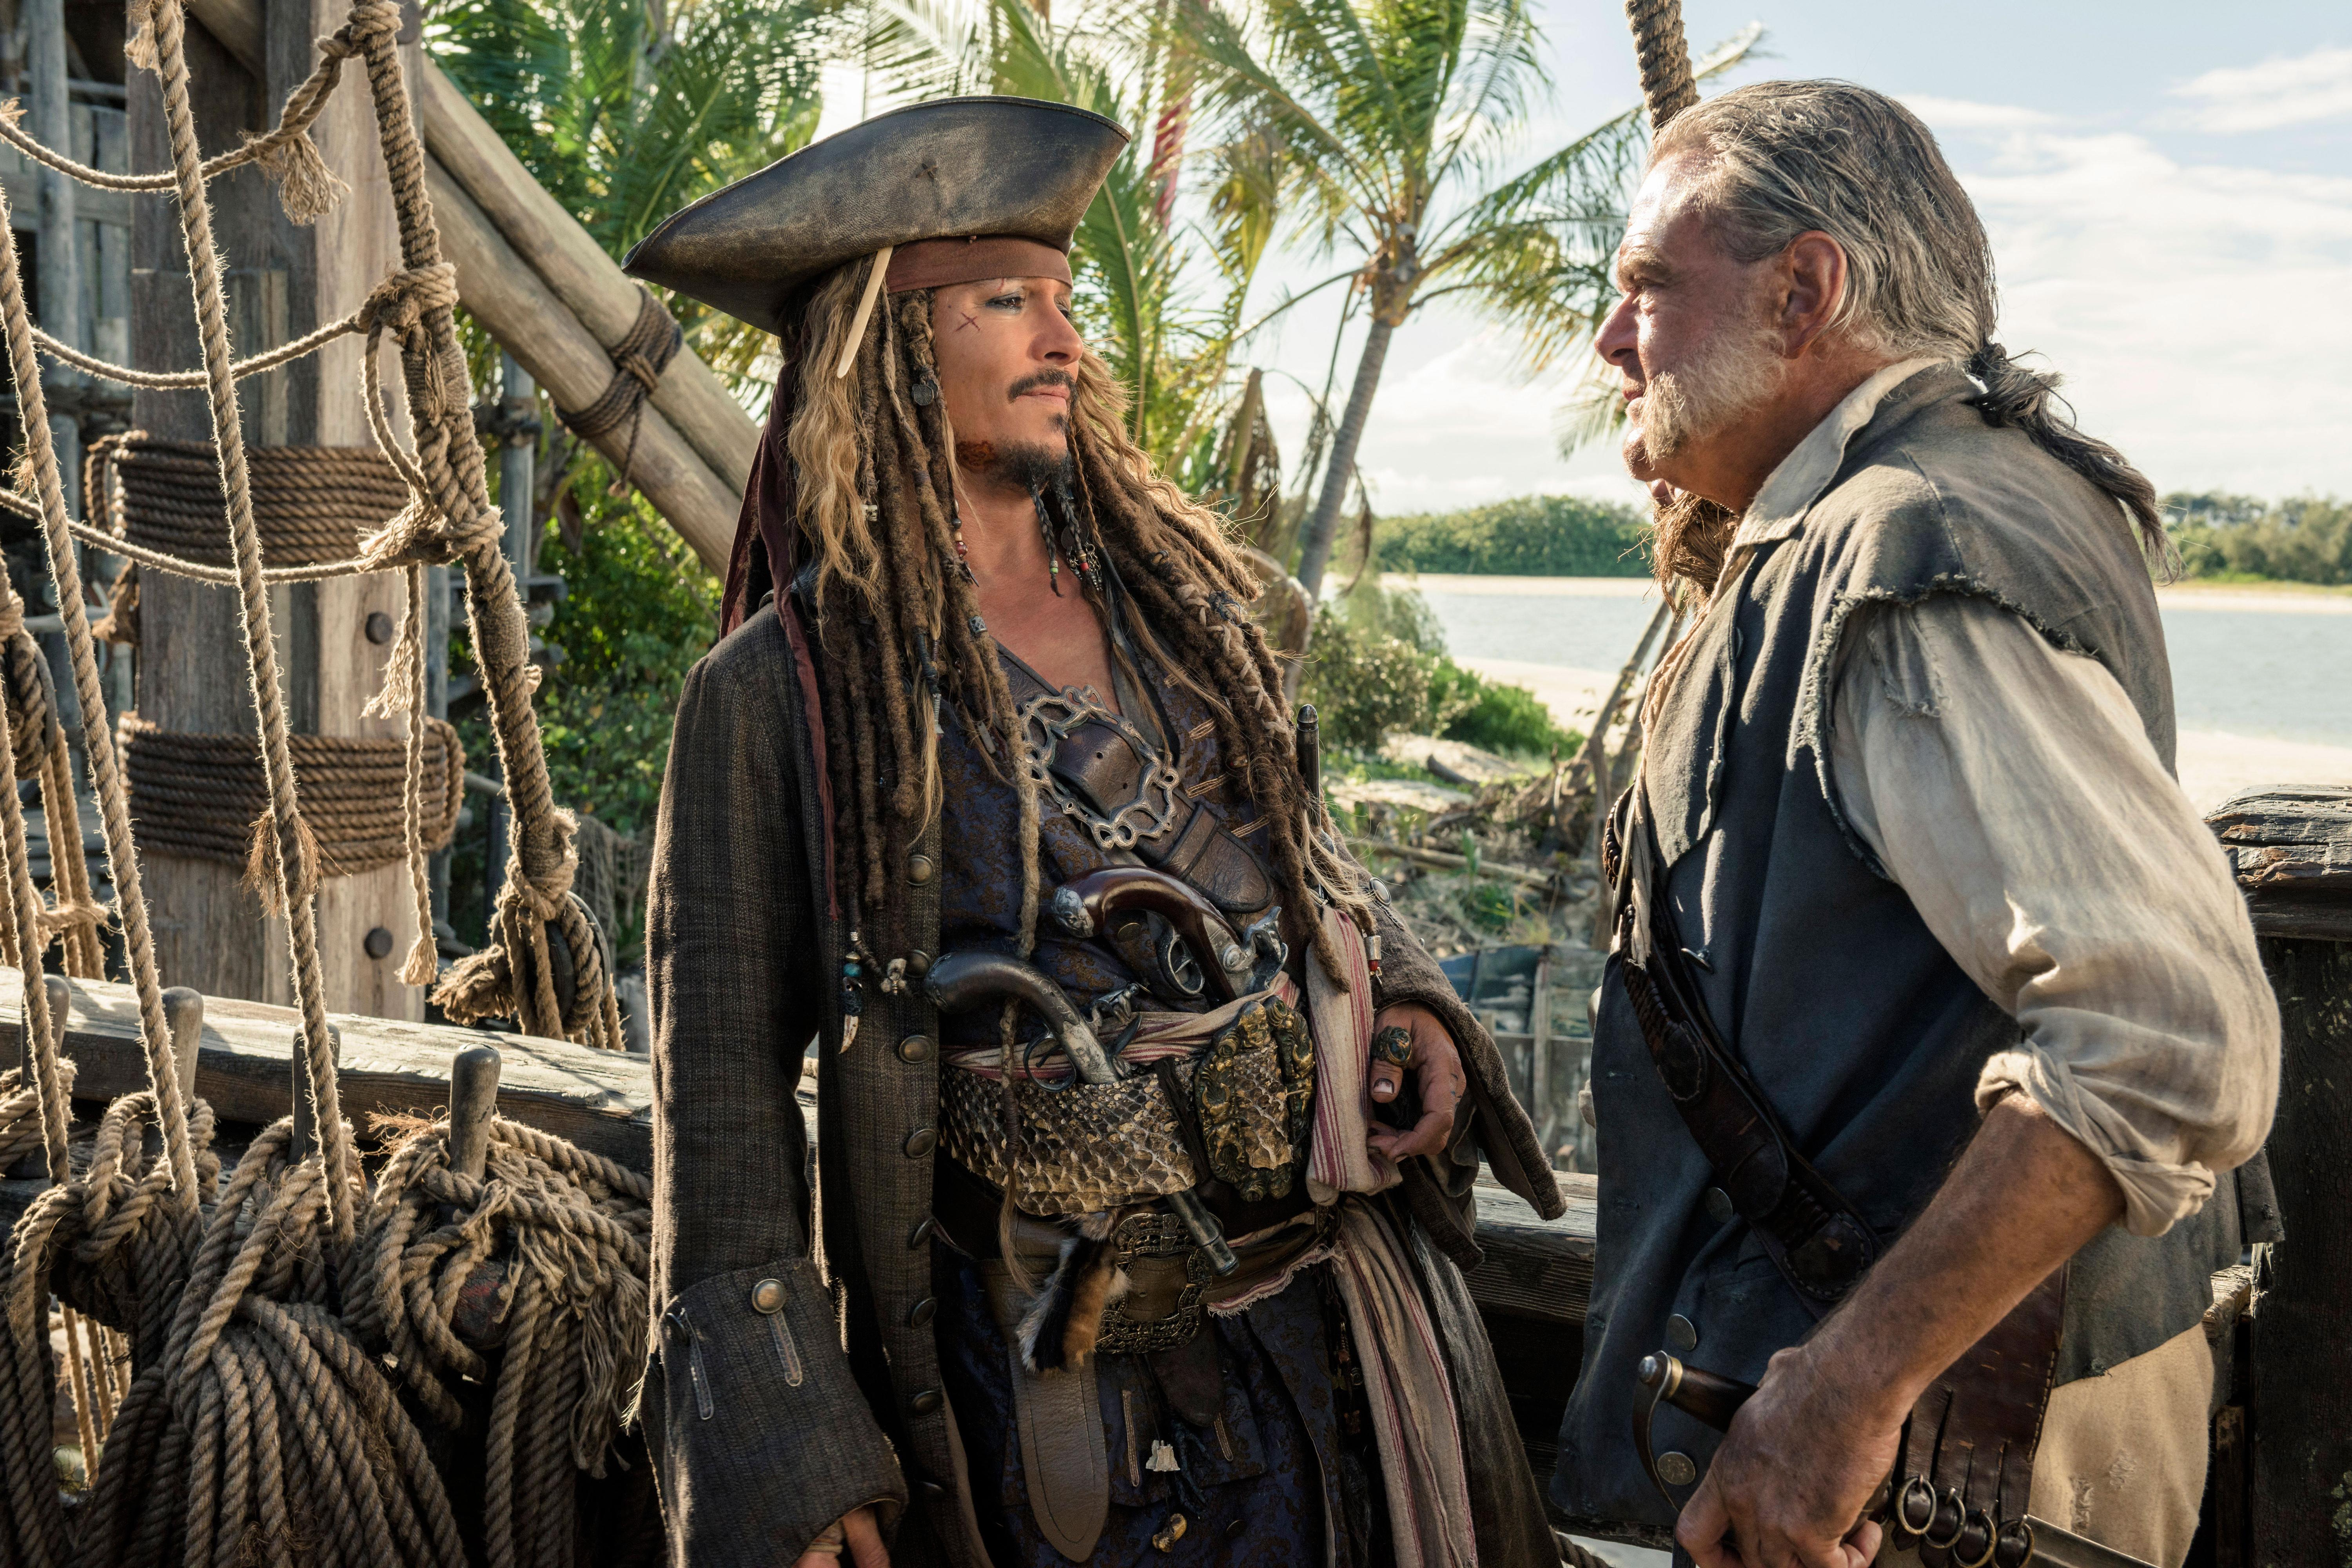 Movie Pirates Of The Caribbean: Dead Men Tell No Tales 4k Ultra HD Wallpaper